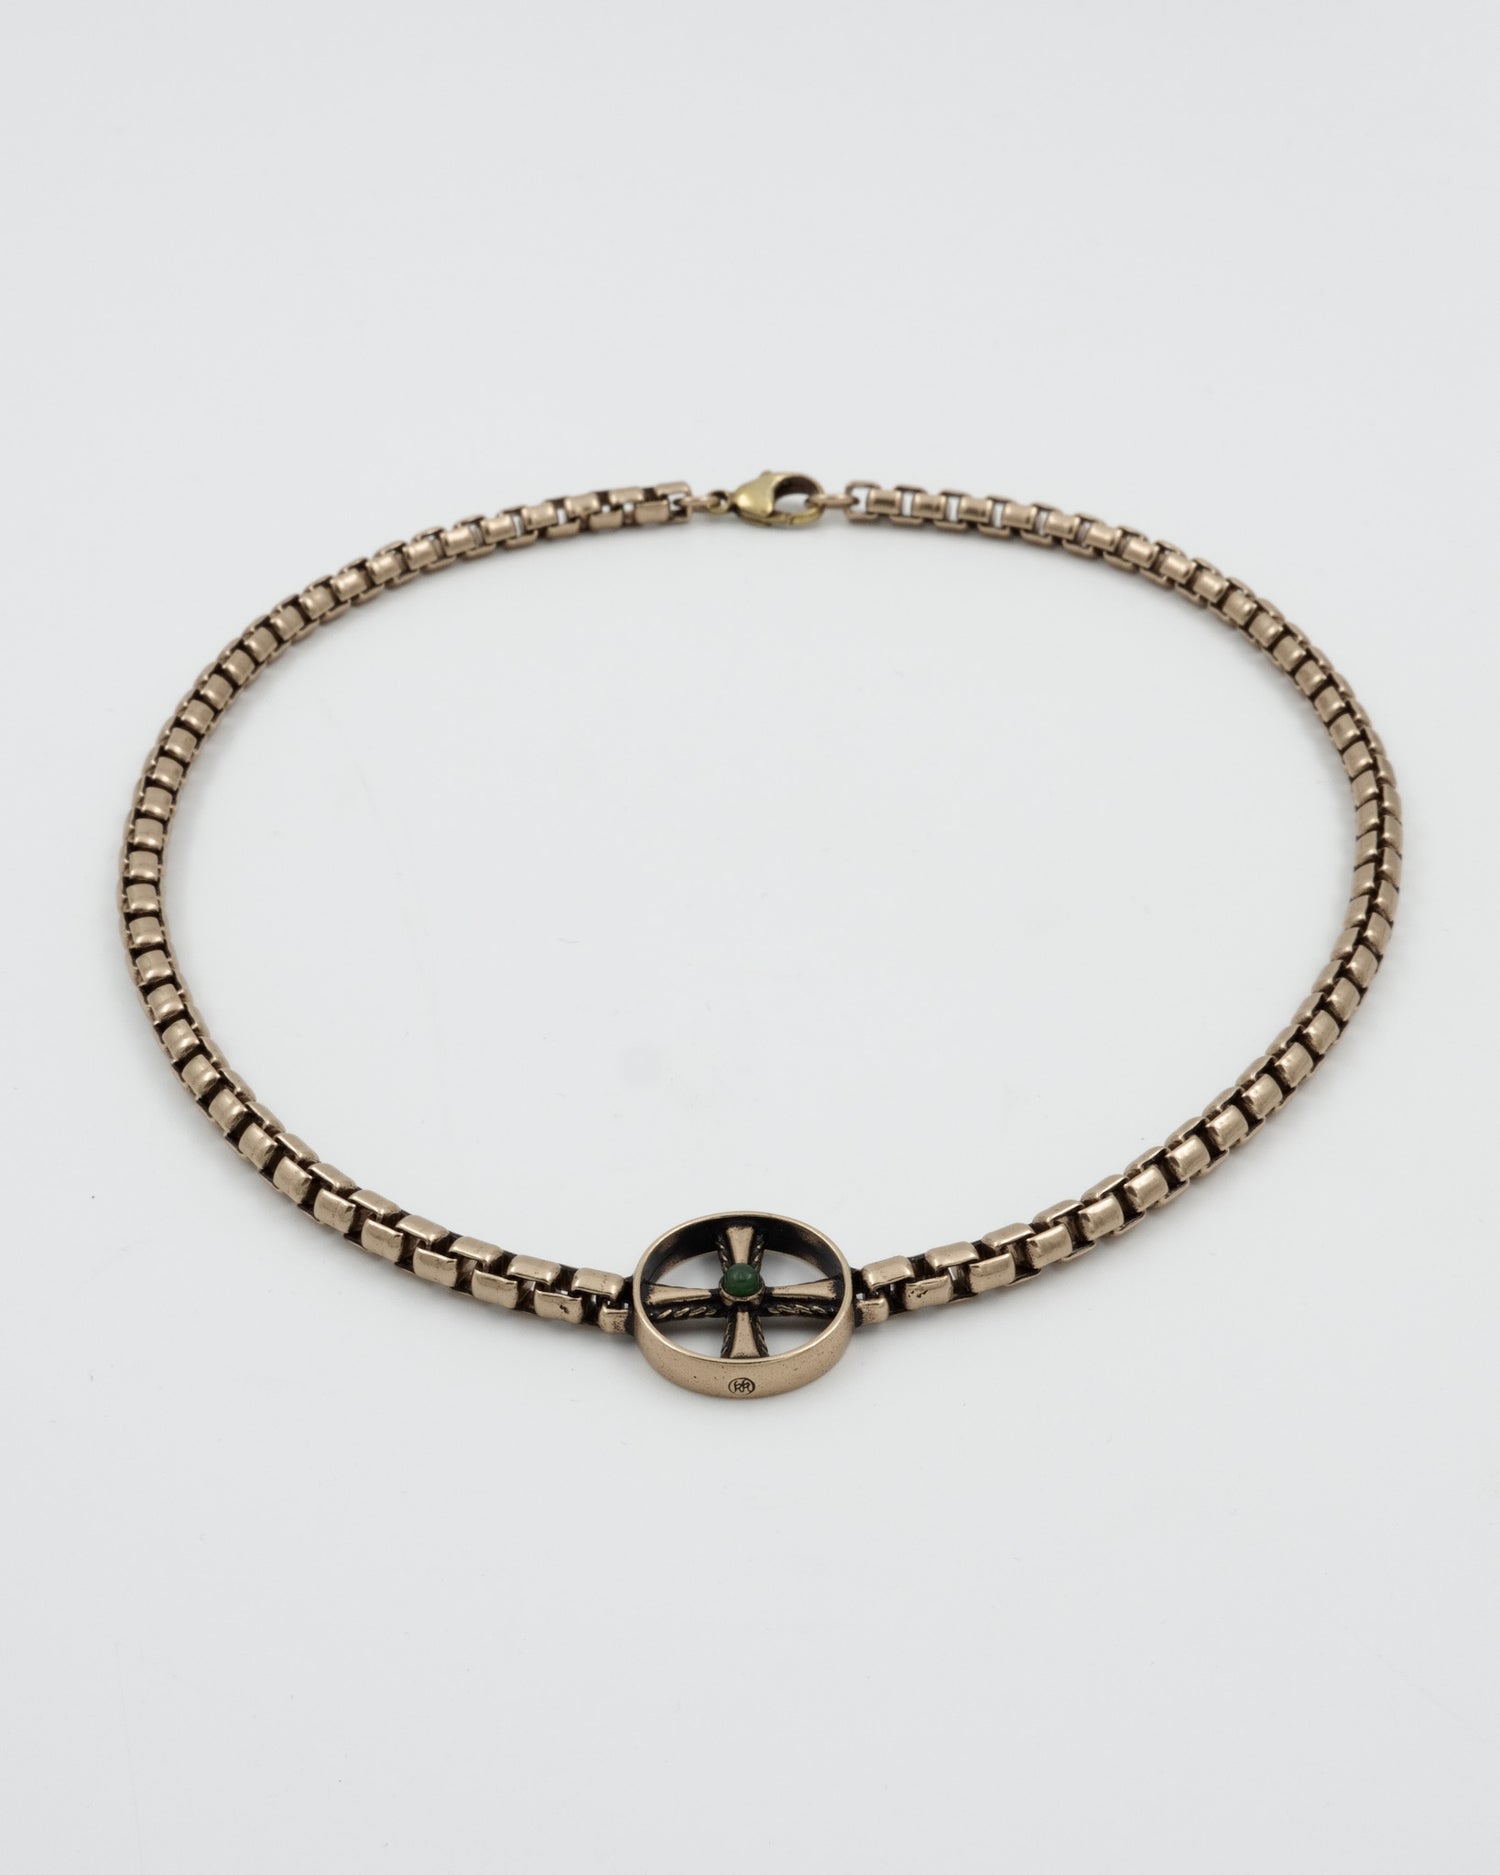 Kept Väinö necklace 50 cm bronze nephrite